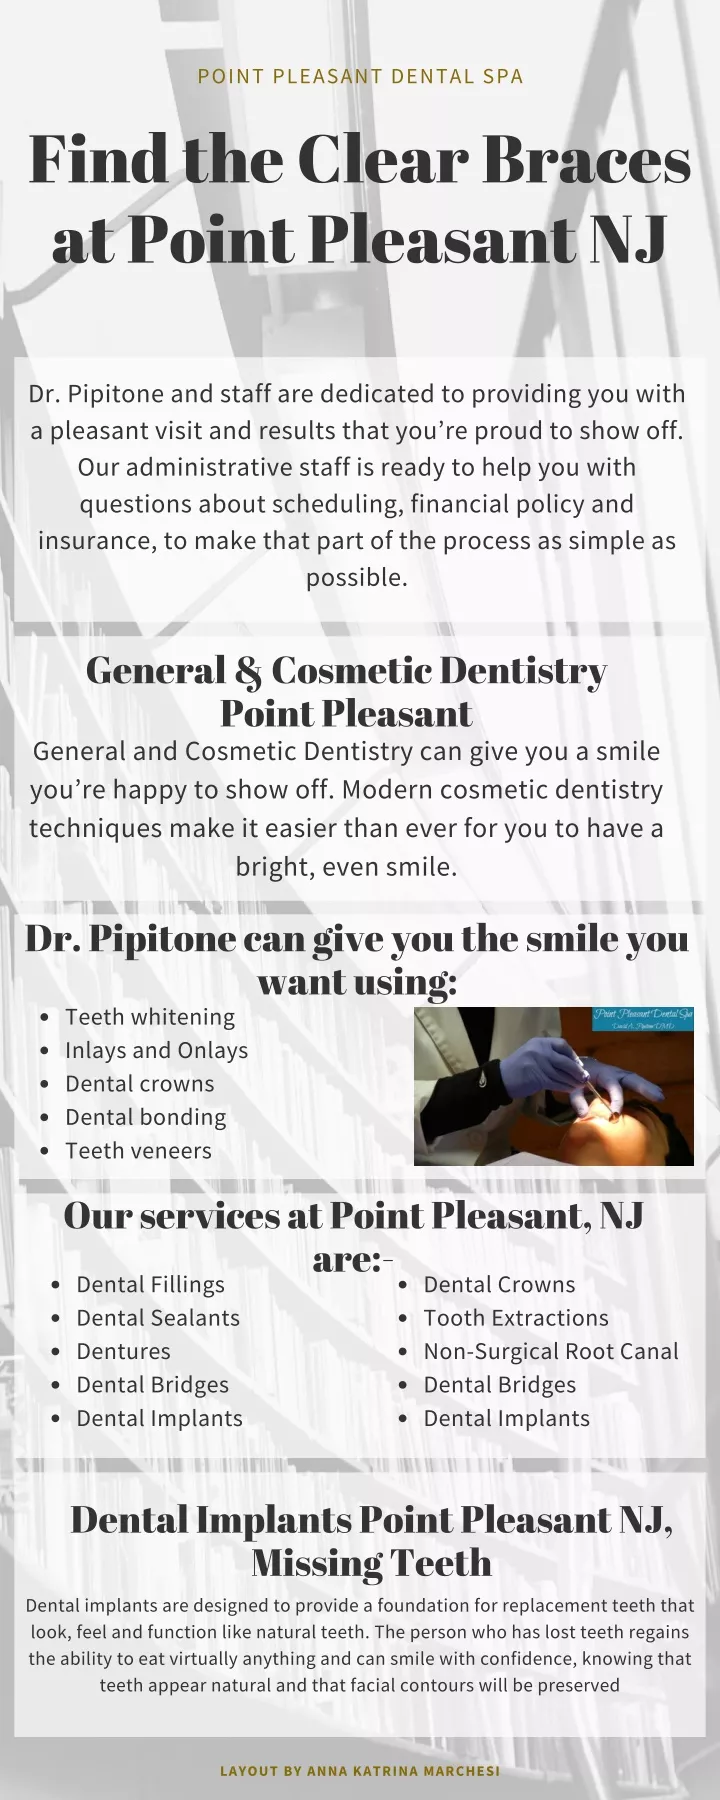 point pleasant dental spa